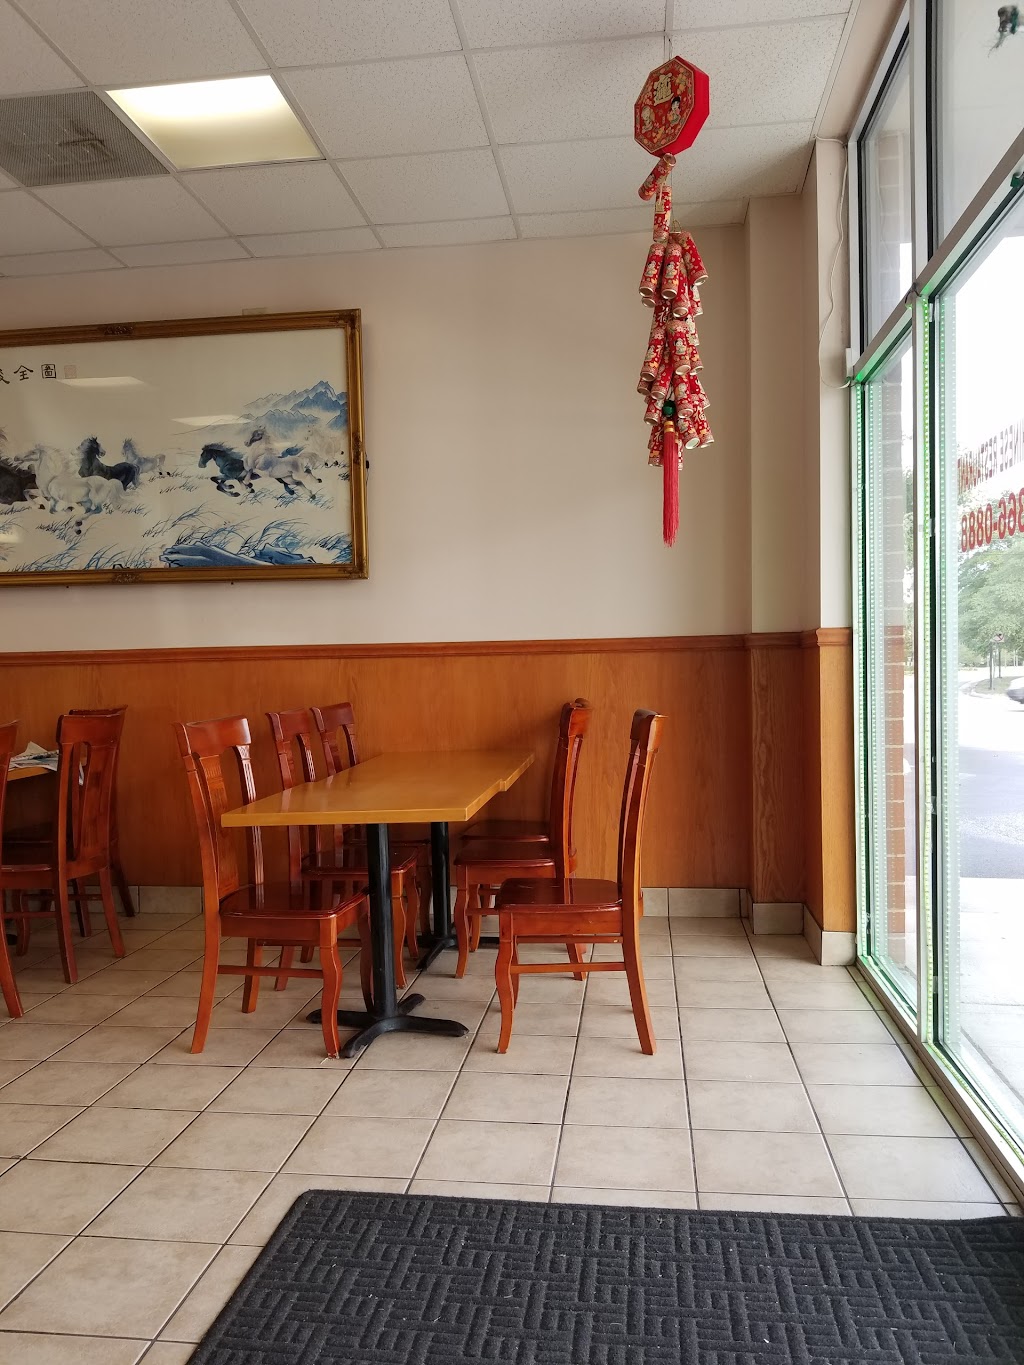 Golden China Restaurant | 977 Reon Dr #110, Virginia Beach, VA 23464, USA | Phone: (757) 366-0888